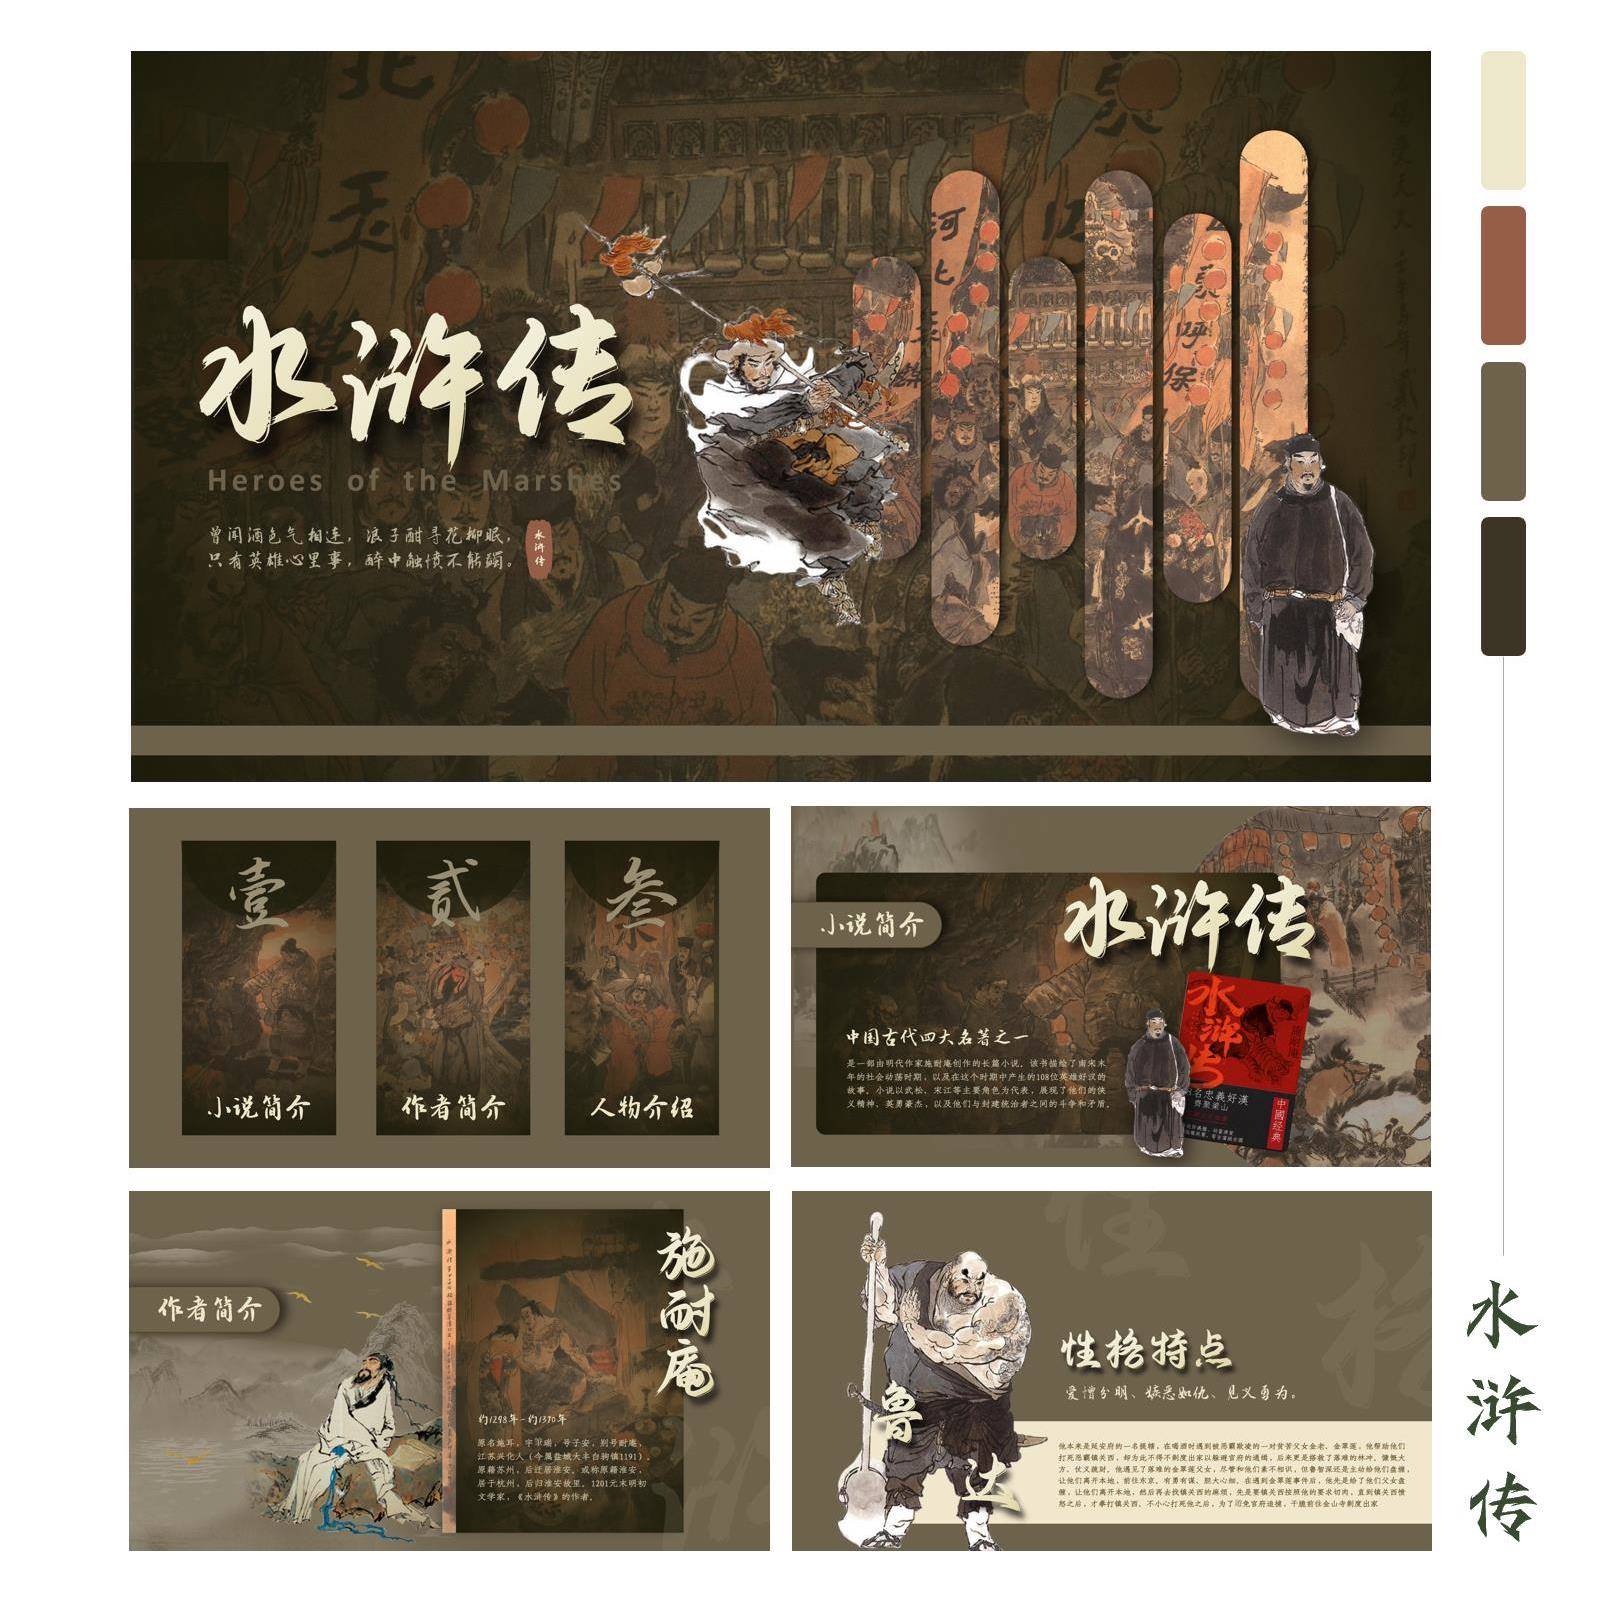 K009水浒传主题中国风人物介绍读书分享动态课件PPT模板